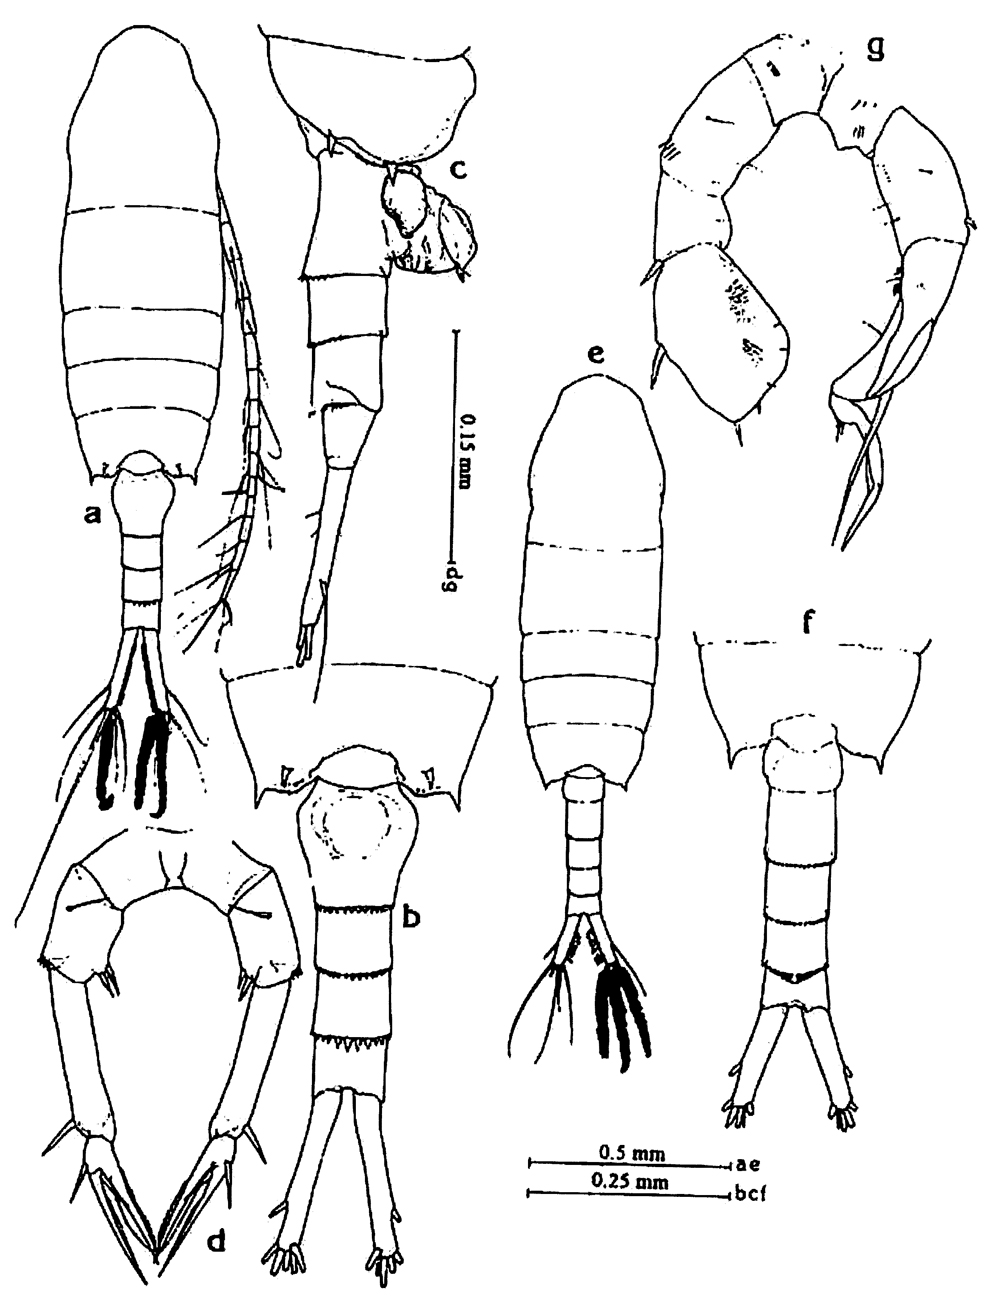 Species Pseudodiaptomus clevei - Plate 5 of morphological figures